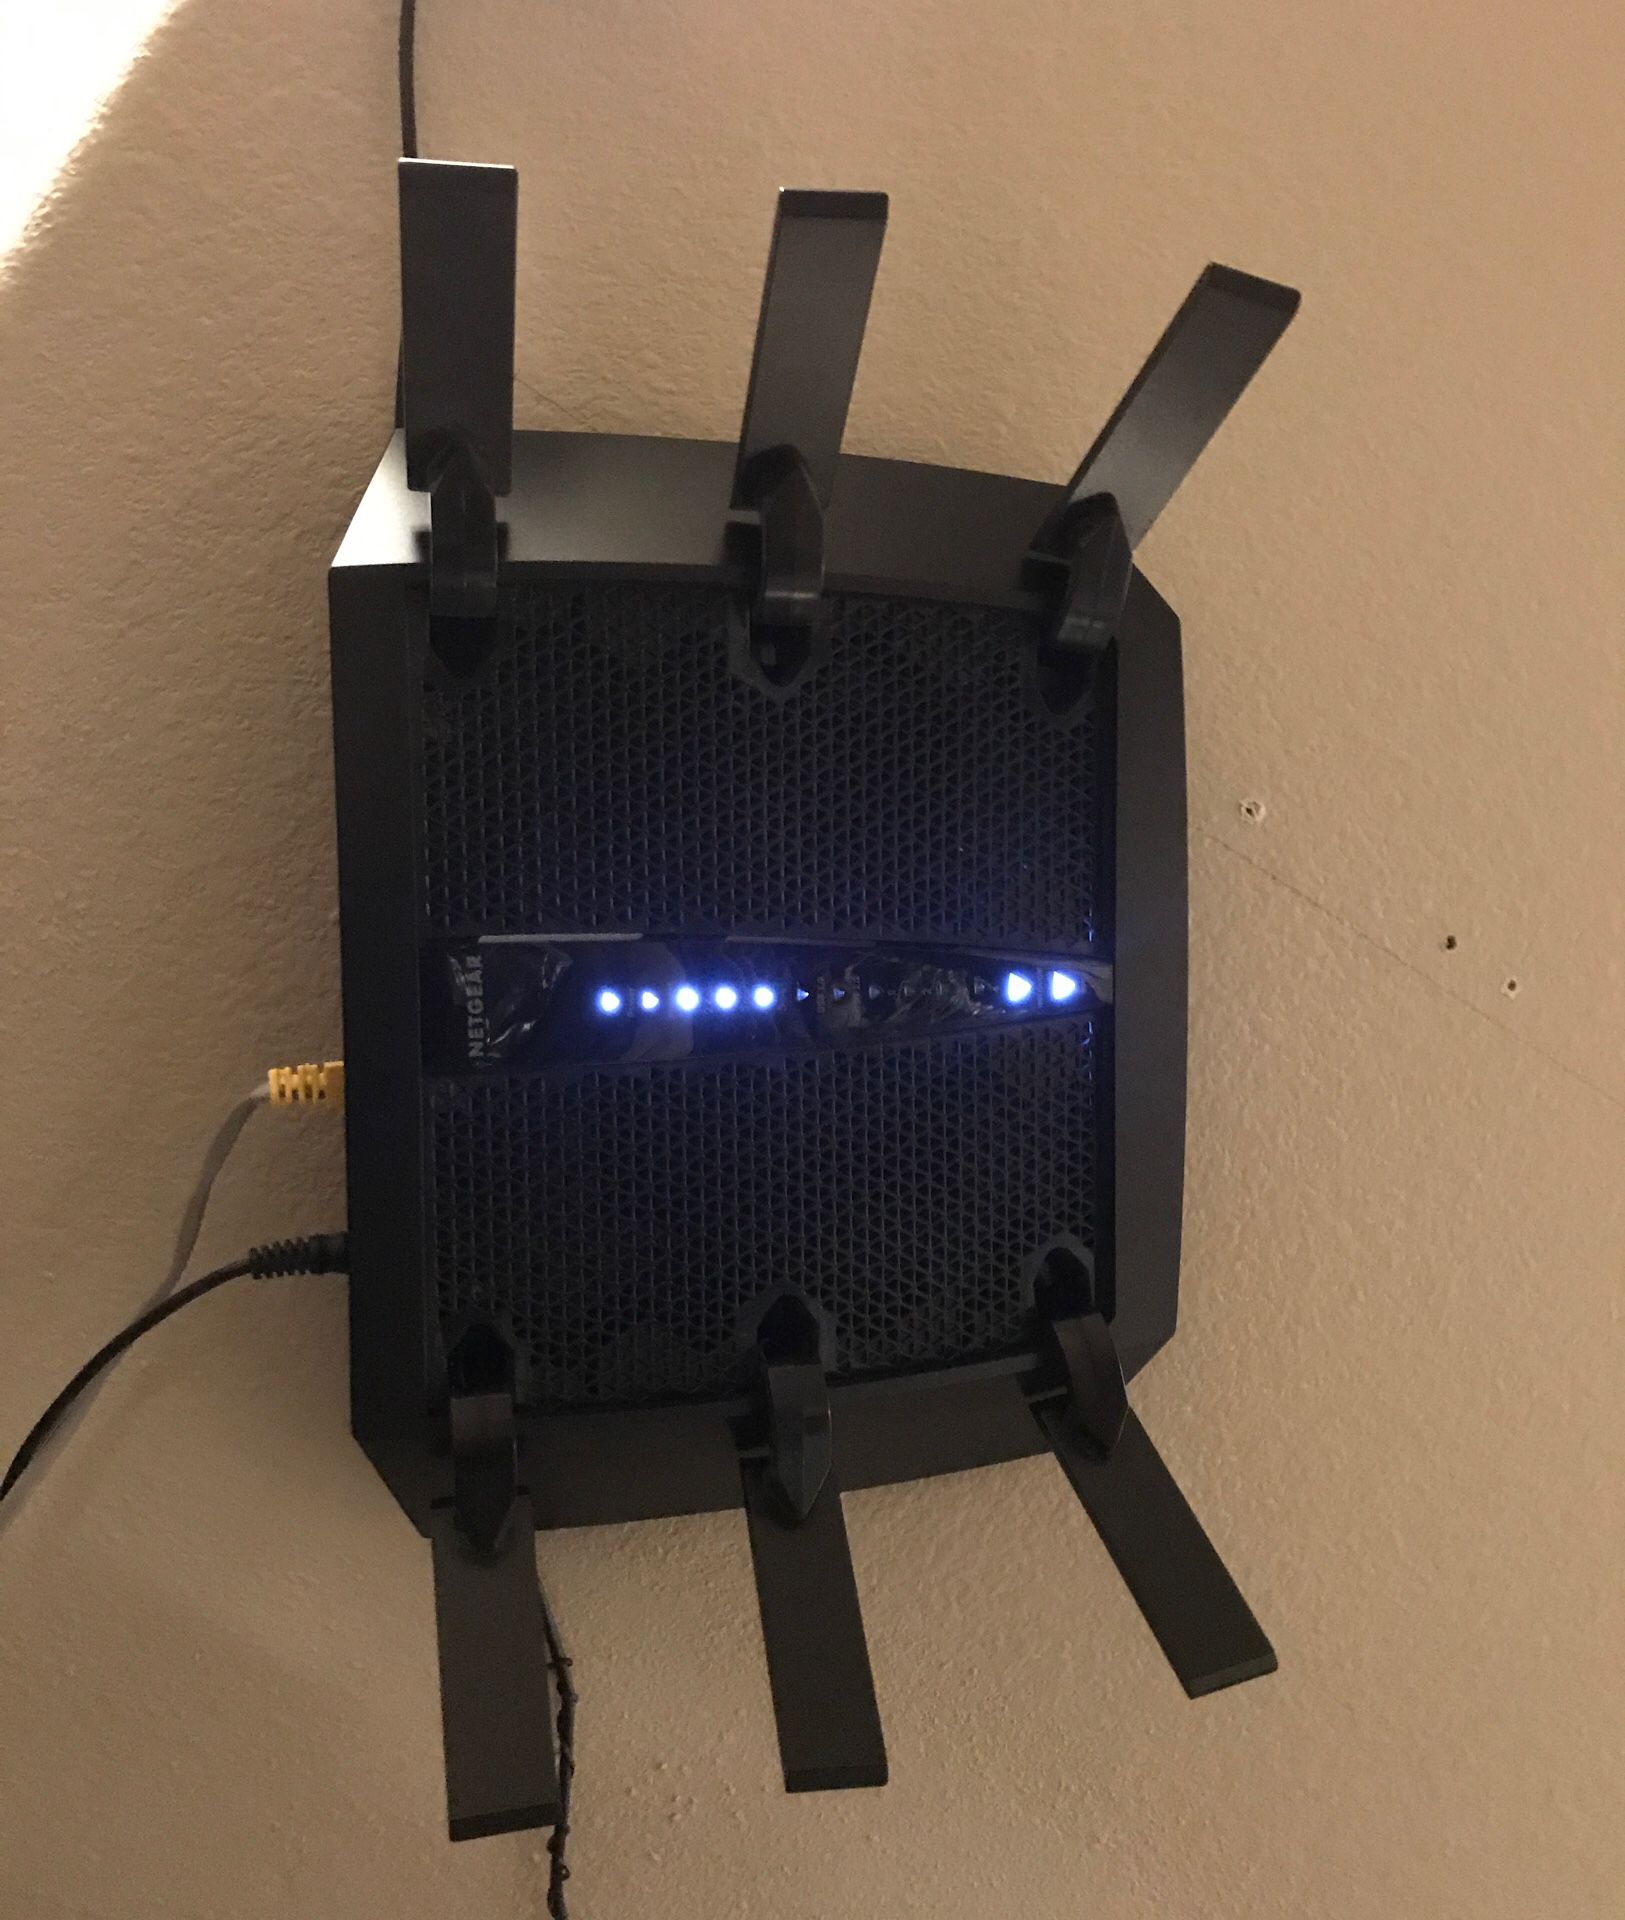 Netgear NightHawk x-6 Triband WiFi Router.